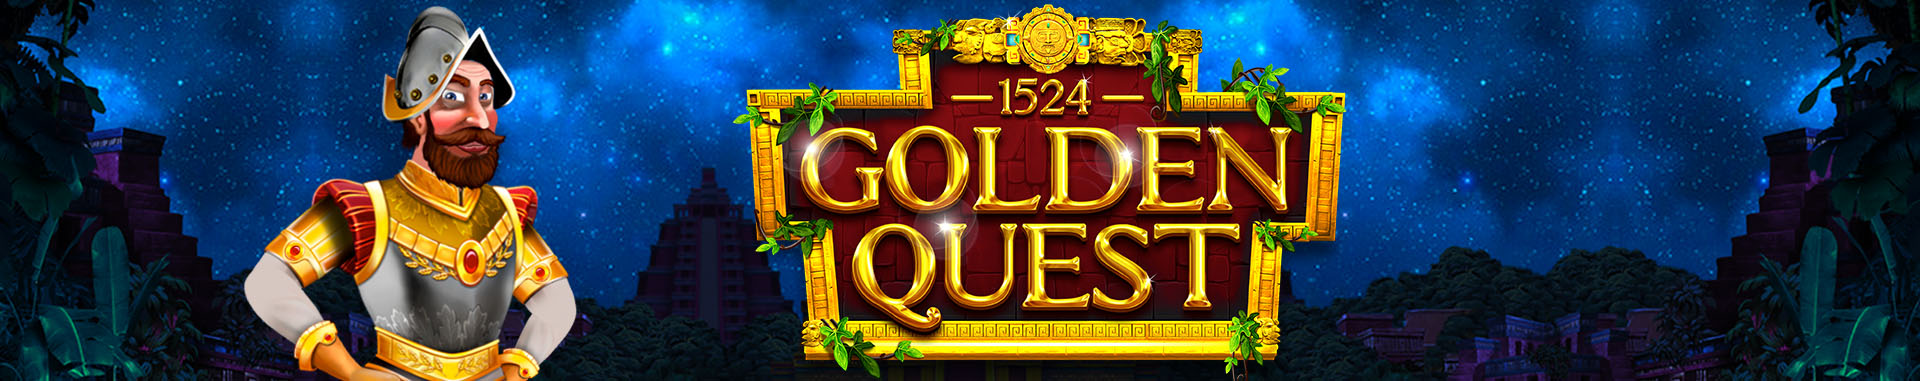 Videobingo 1524 Golden Quest